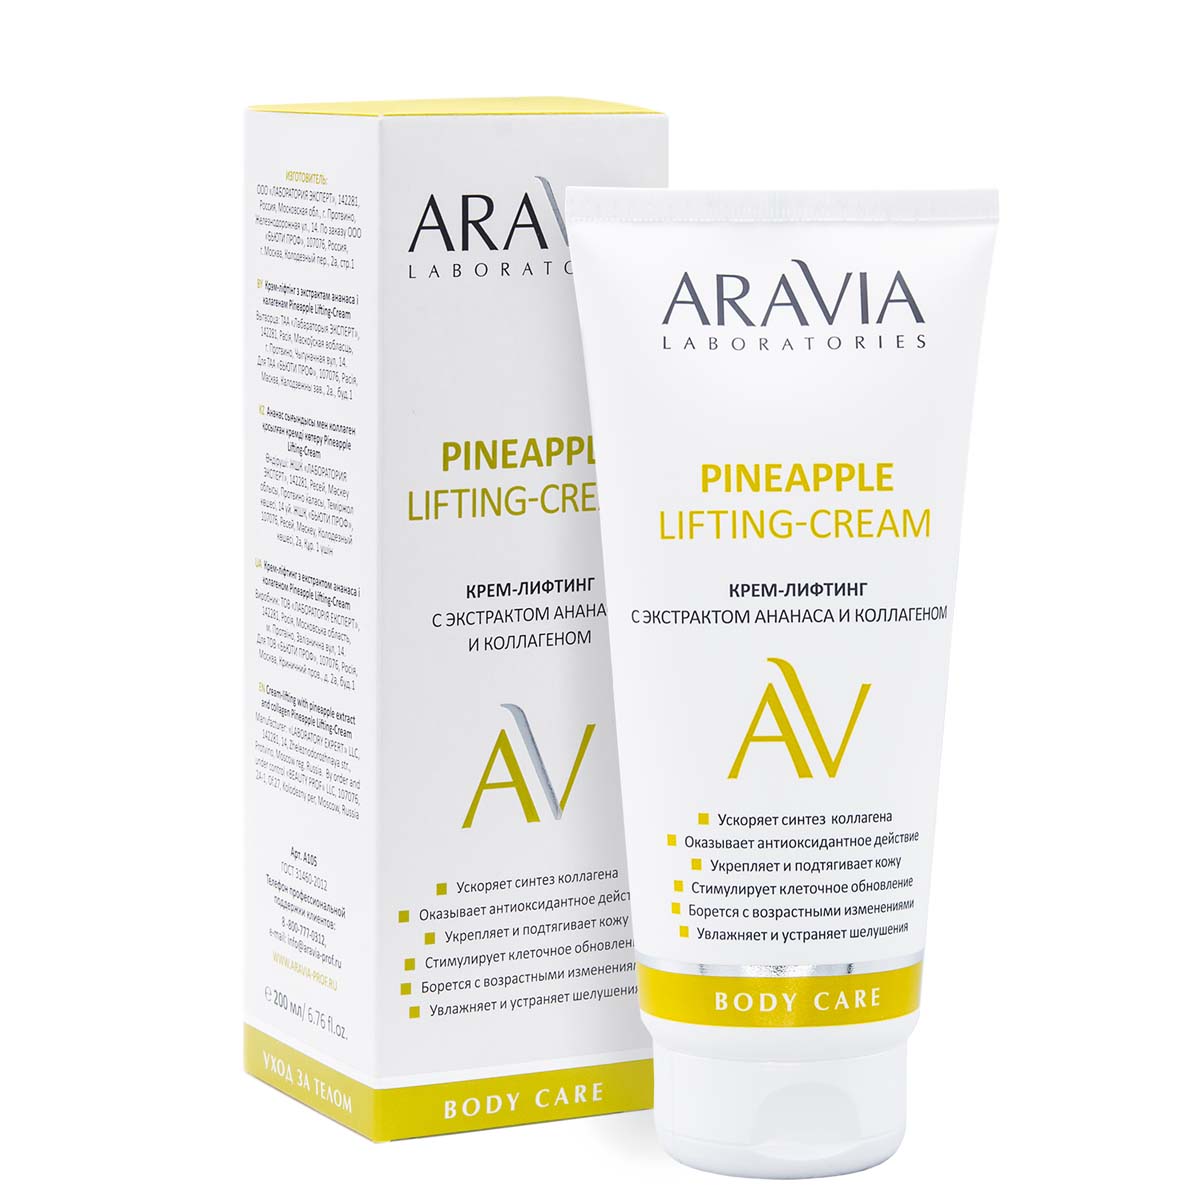 Aravia Laboratories Крем-лифтинг с экстрактом ананаса и коллагеном Pineapple Lifting-Cream, 200 мл (Aravia Laboratories, Уход за телом) цена и фото